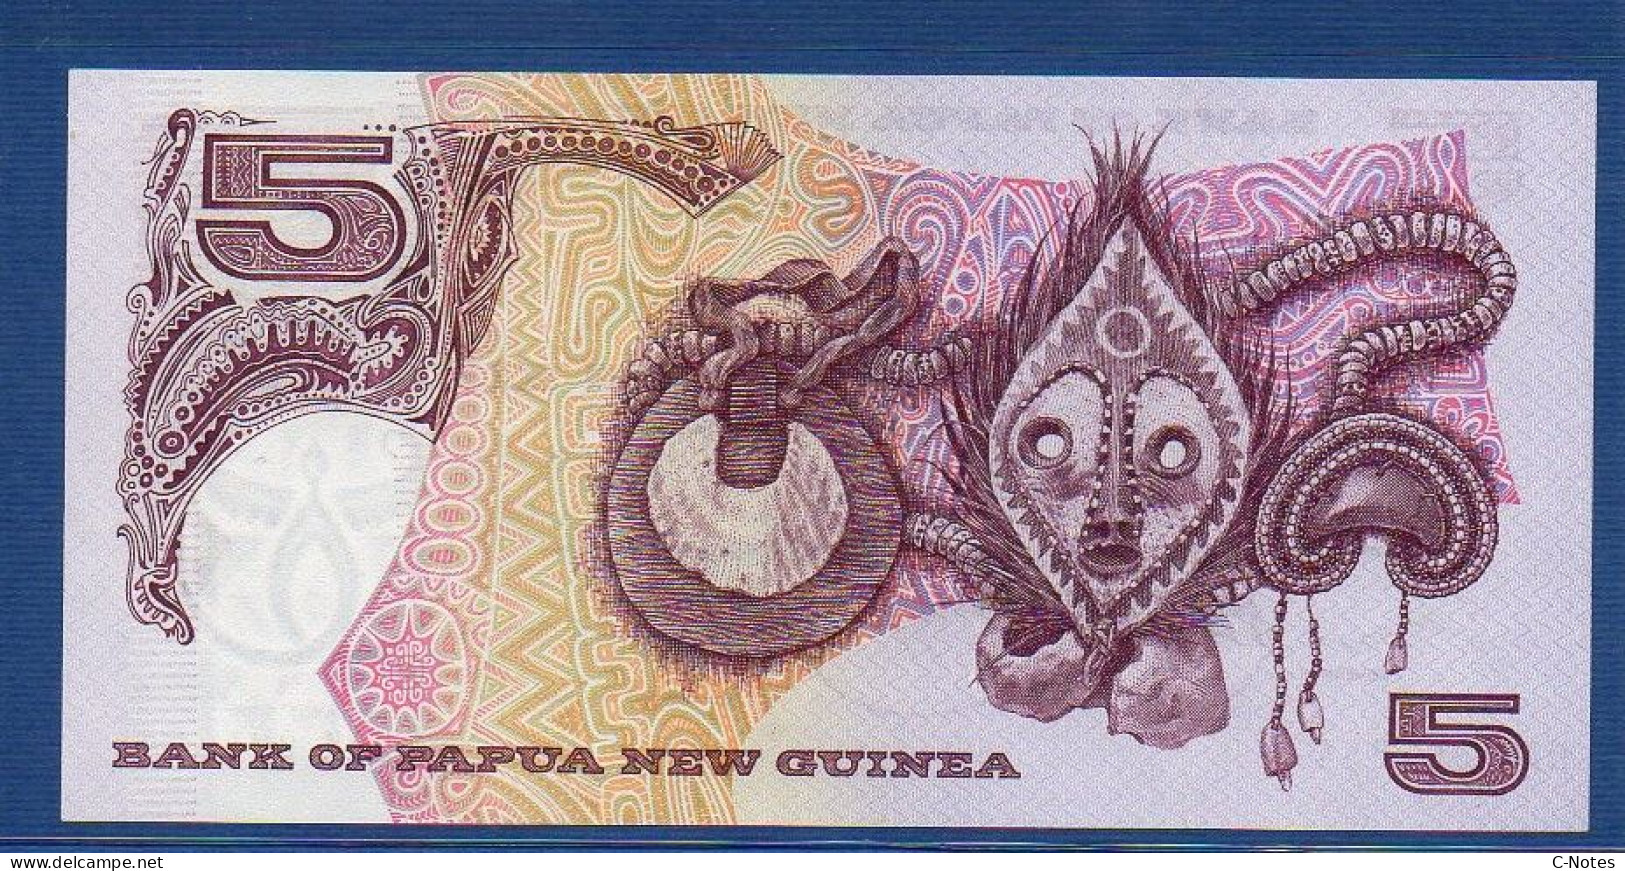 PAPUA NEW GUINEA - P. 6a – 5 KINA ND (1981-1987) UNC, S/n HAK 004854 - Papua-Neuguinea